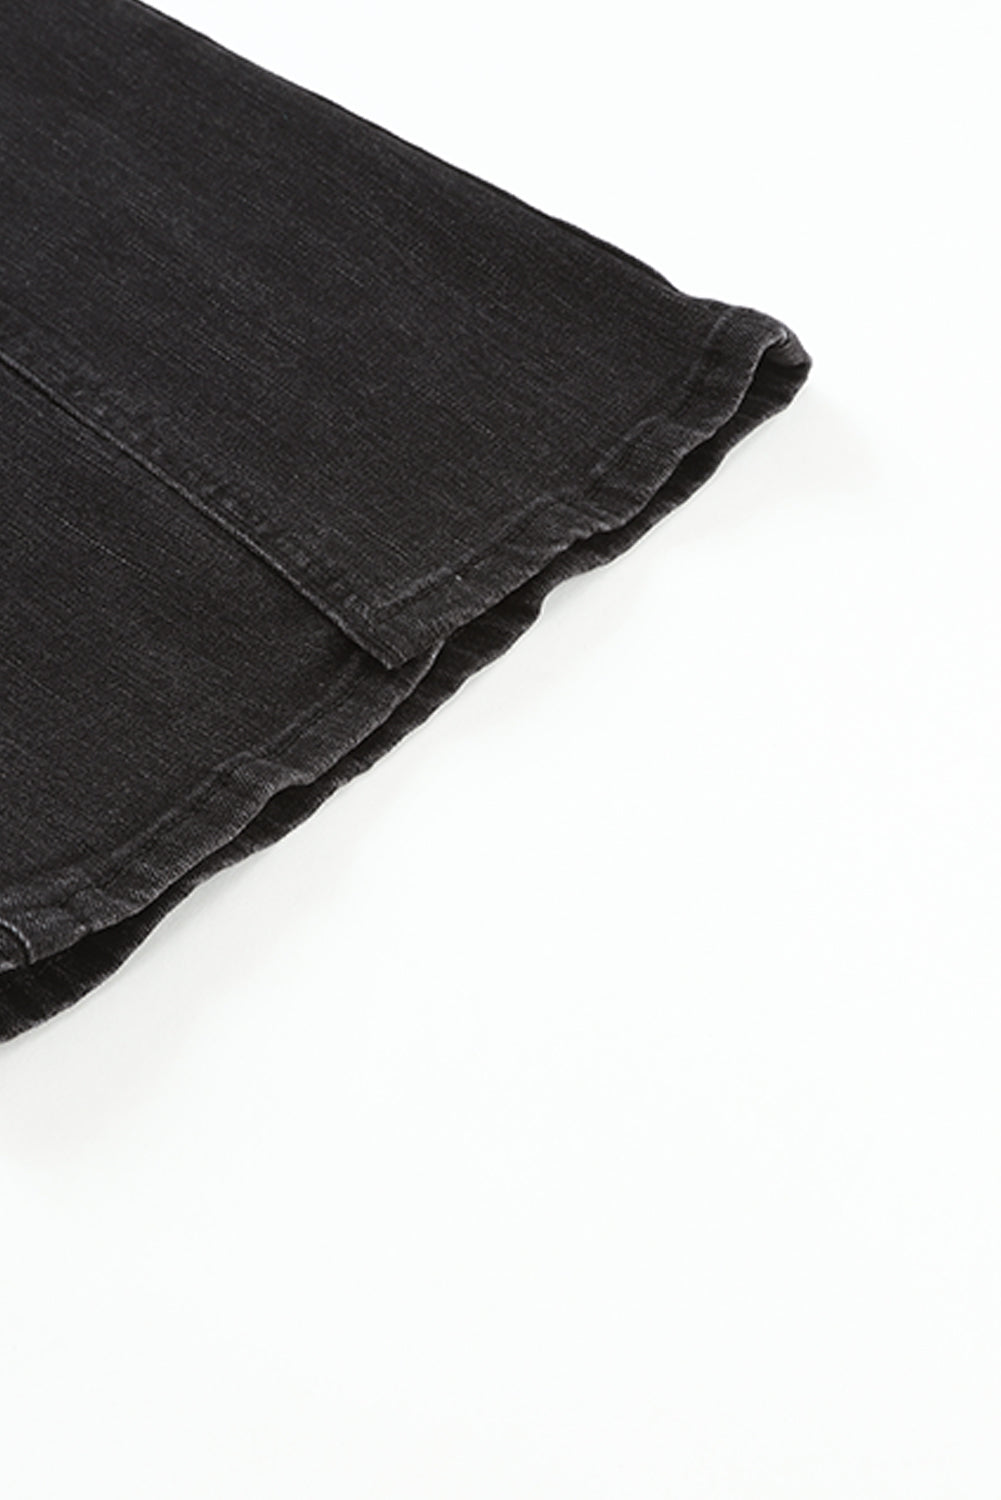 Black Exposed Seam Split Flare Jeans Jeans JT's Designer Fashion